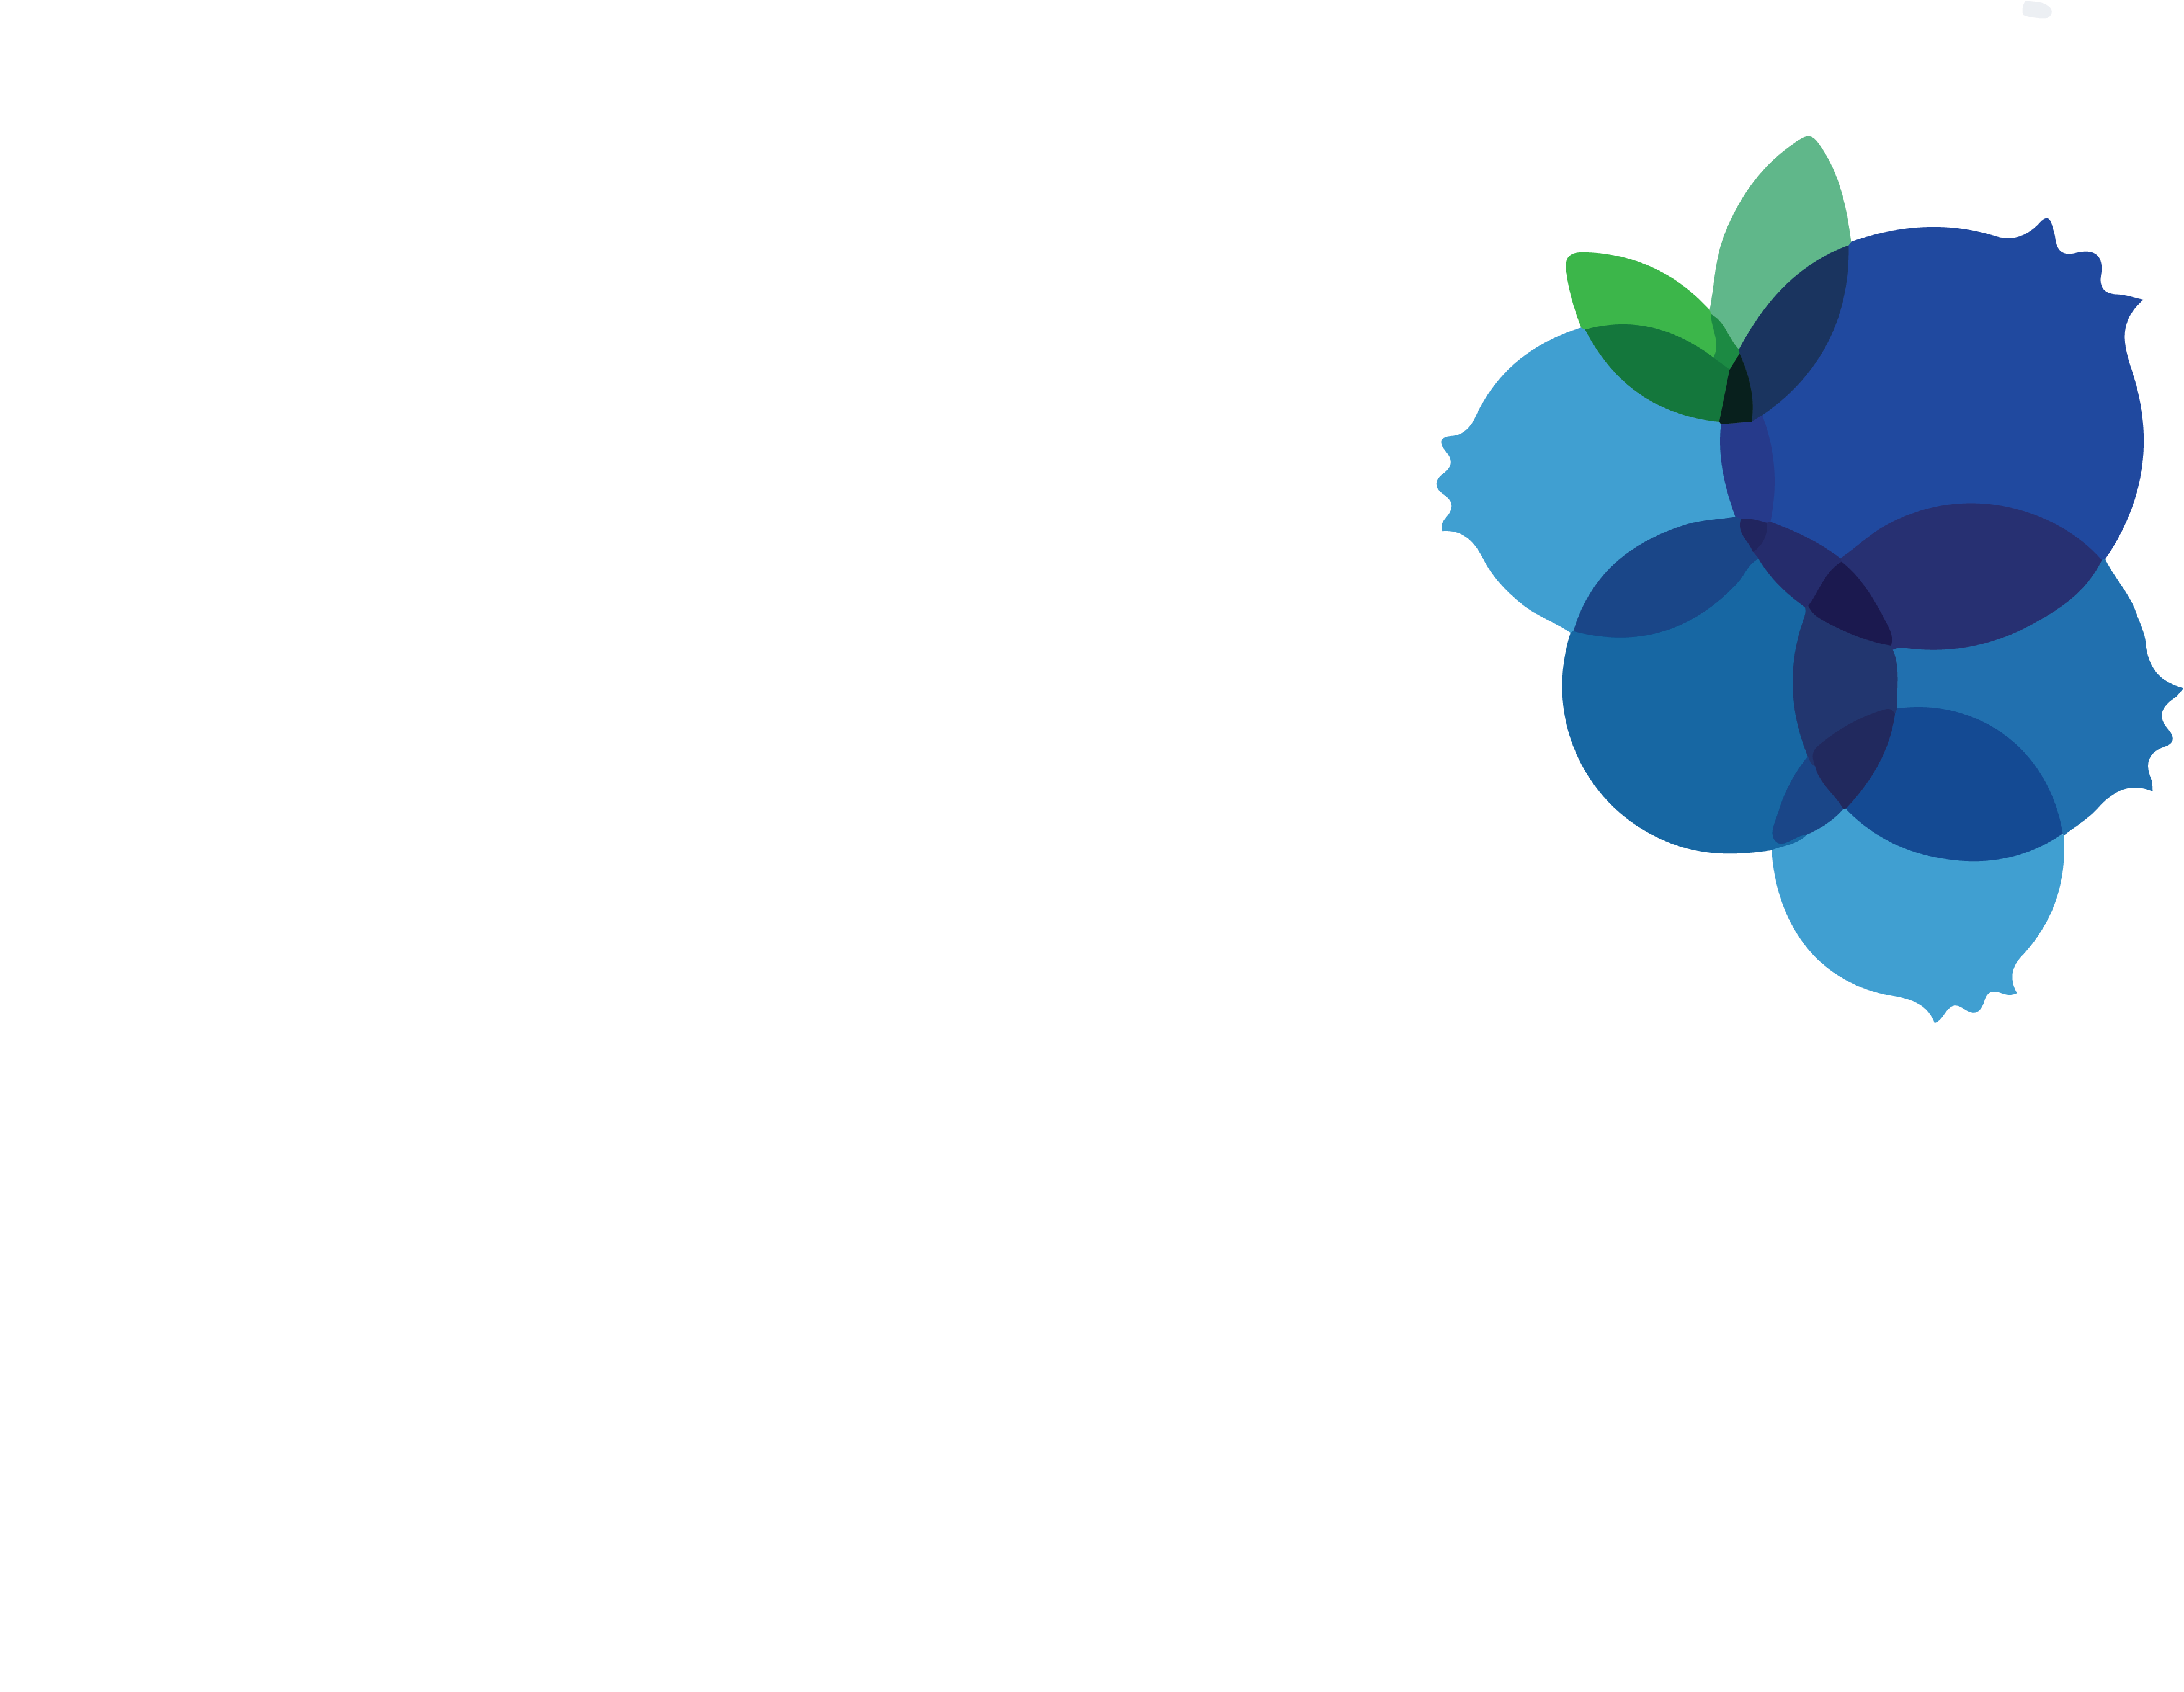 BlueBerries Marketing